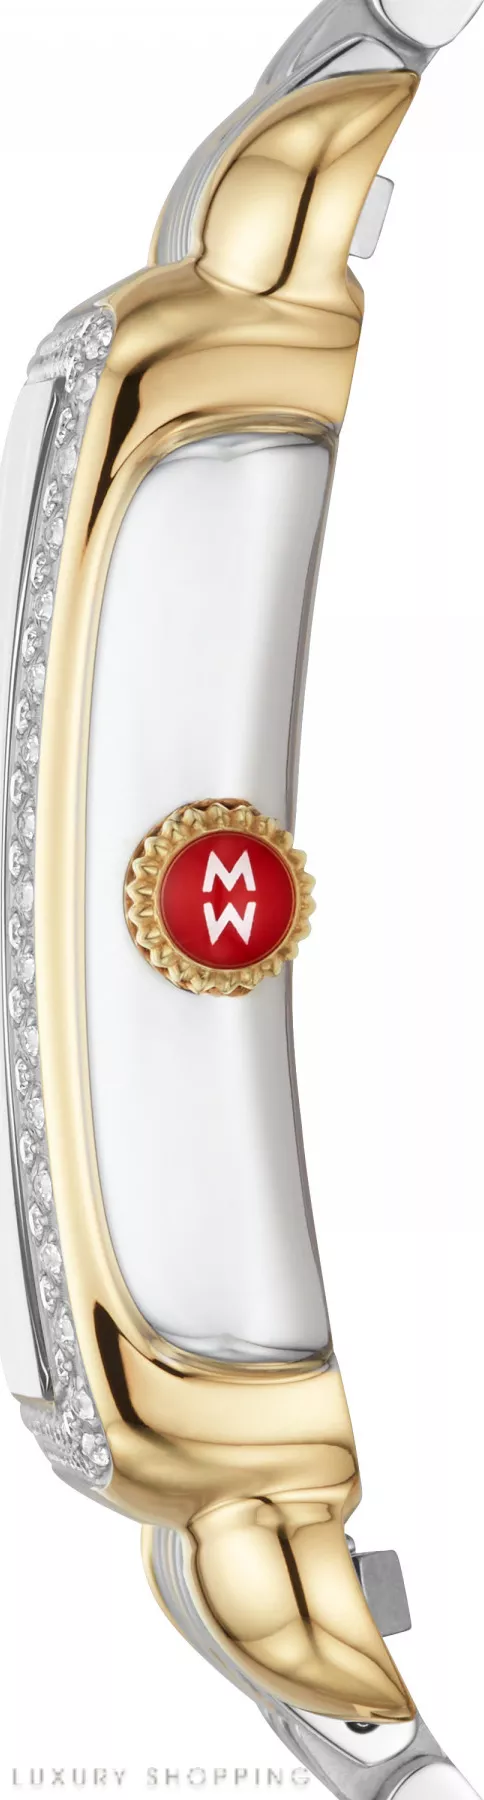 Michele Deco Diamond Watch 26.5mm x 37mm